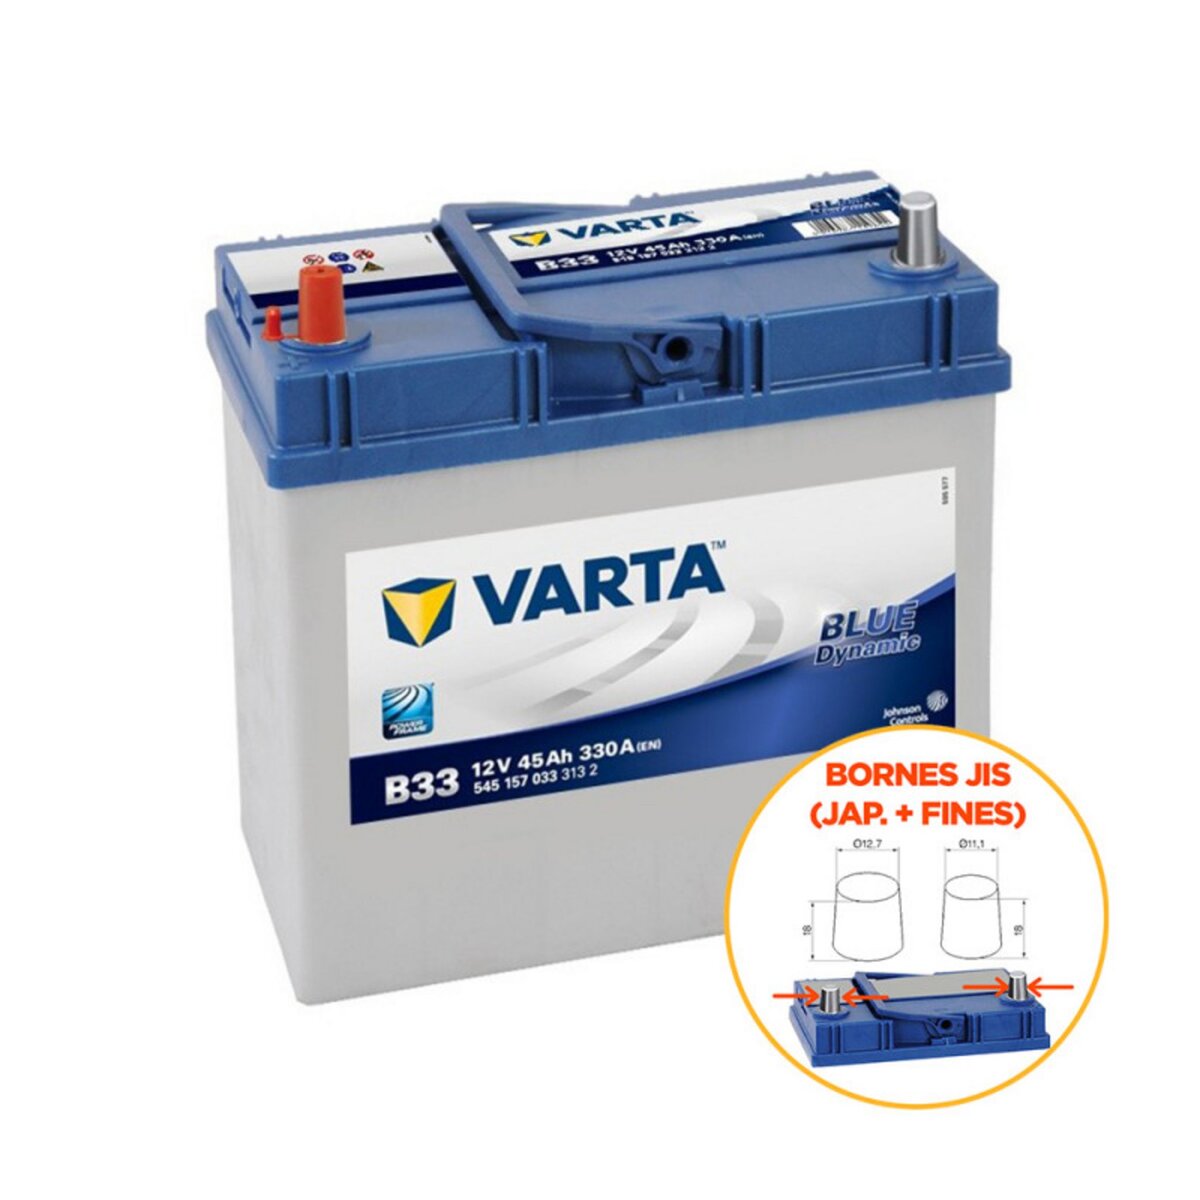 Varta Batterie Varta Blue Dynamic B33 12v 45ah 330A 545 157 033 pas cher 